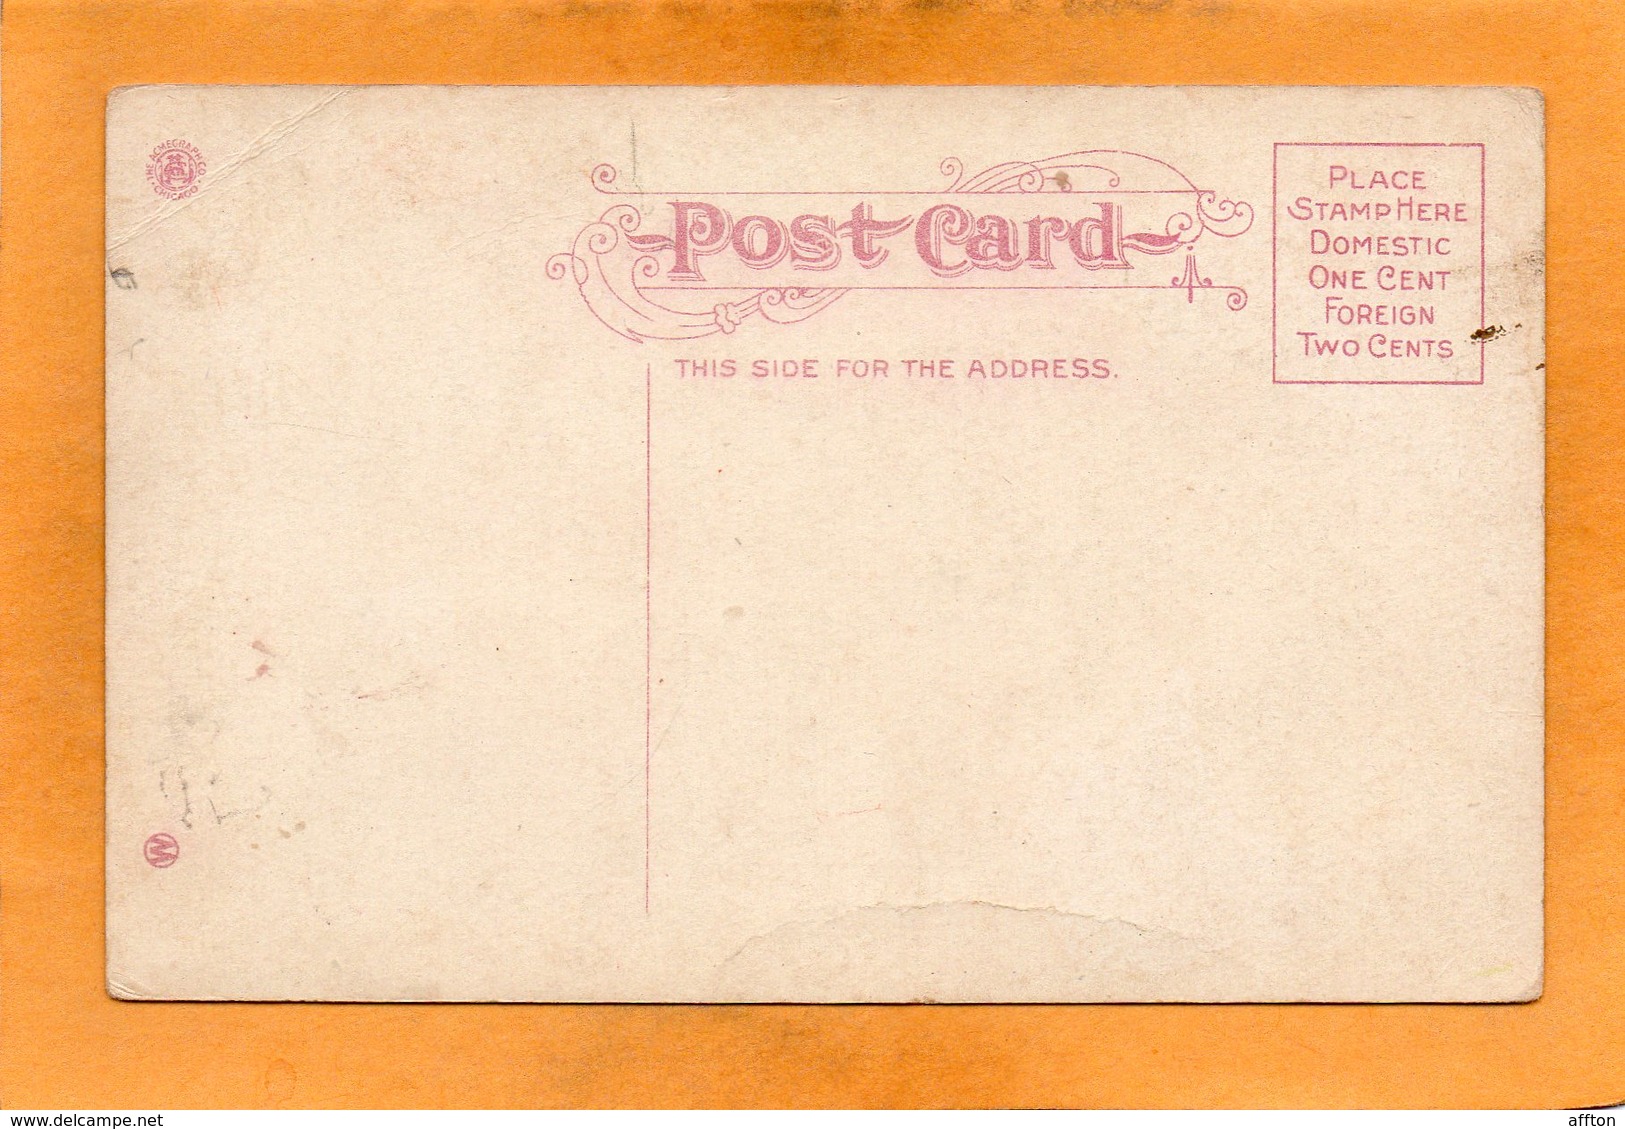 Appleton Wis 1910 Postcard - Appleton